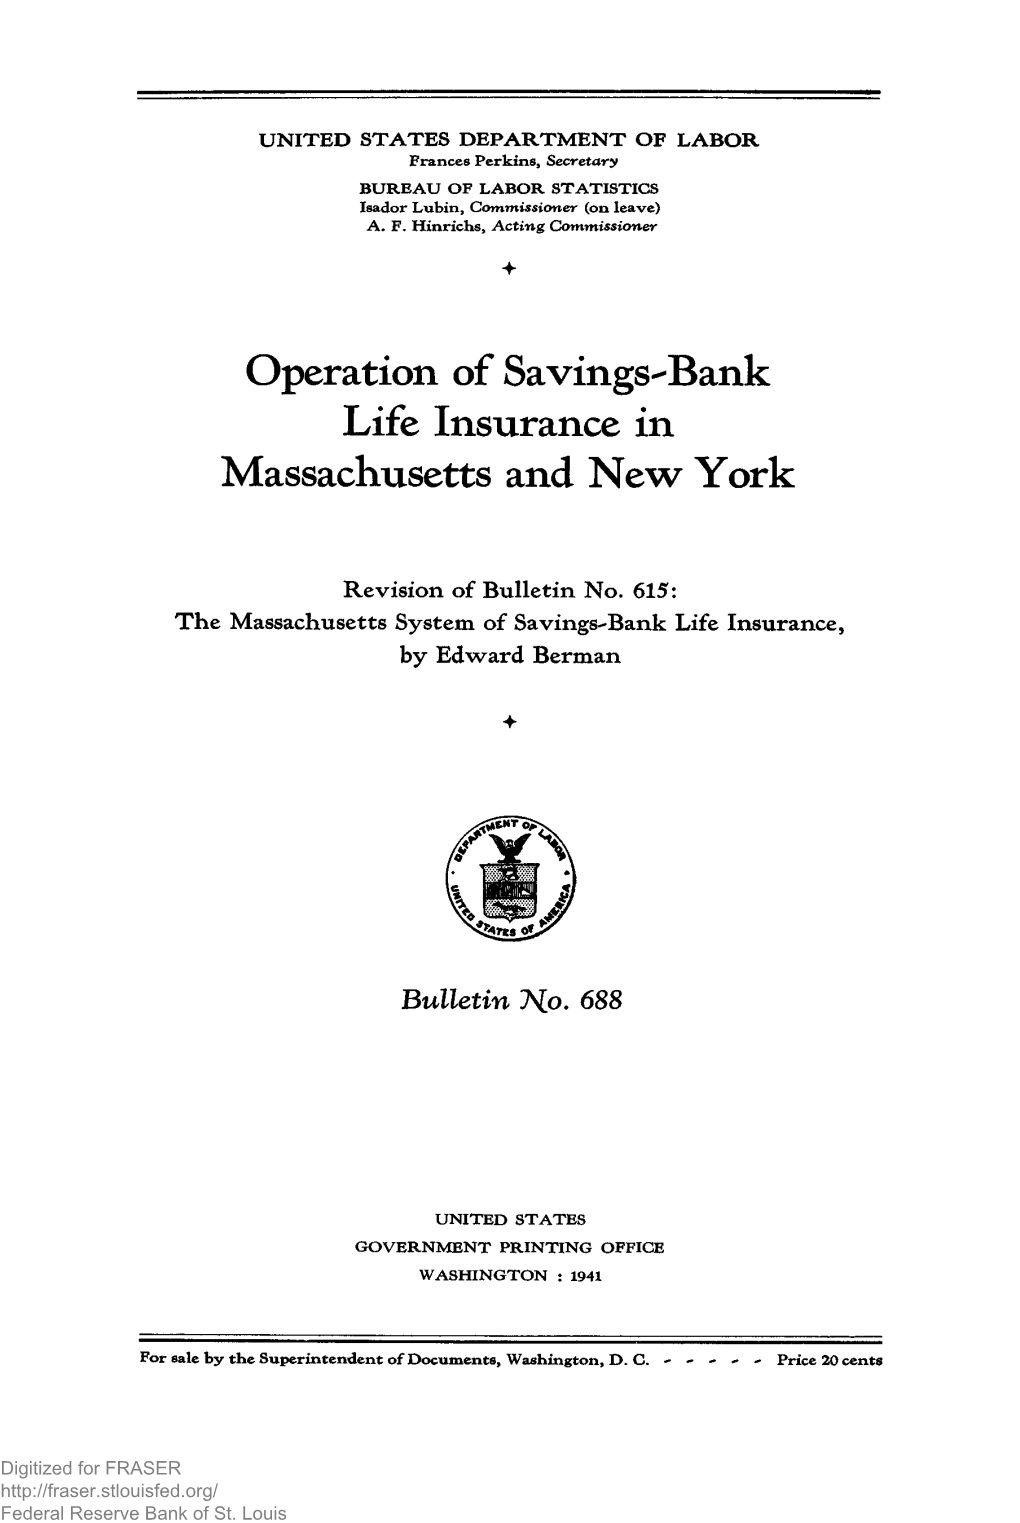 Operation of Savings-Bank Life Insurance in Massachusetts and New York